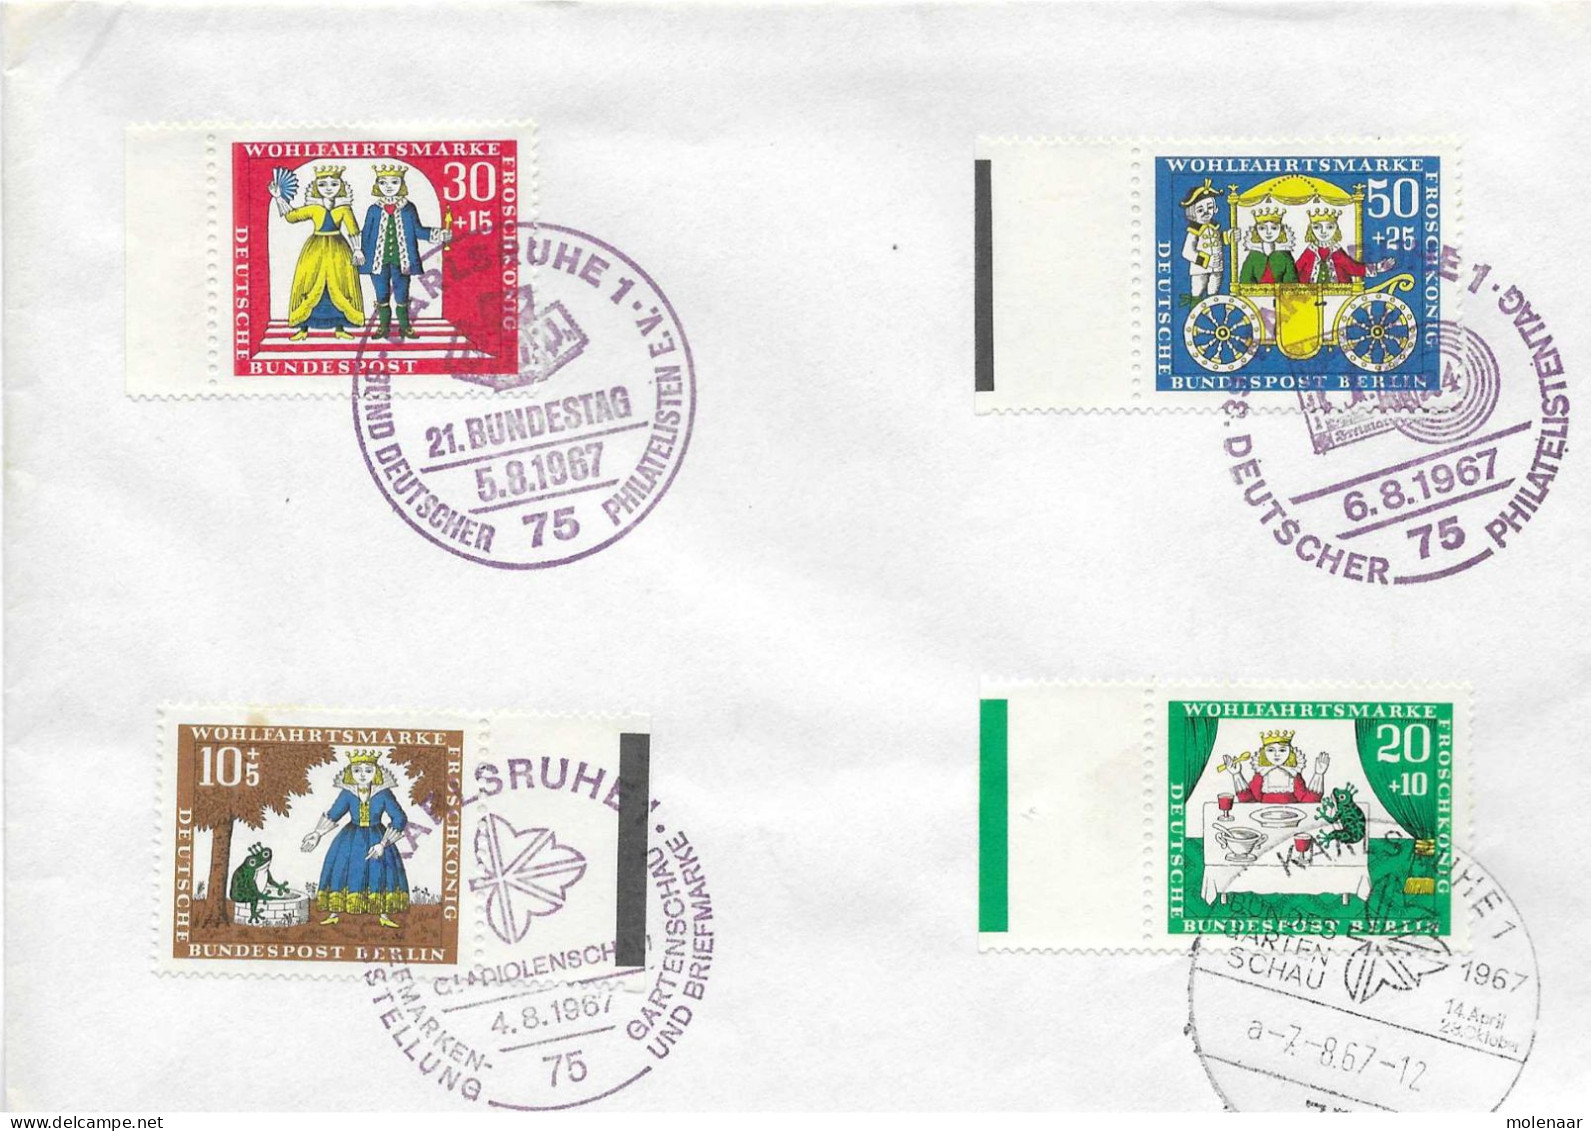 Postzegels > Europa > Duitsland > West-Duitsland > 1960-1969 > Brief Met 523-525 4 Verschillende Stempels (17301) - Covers & Documents